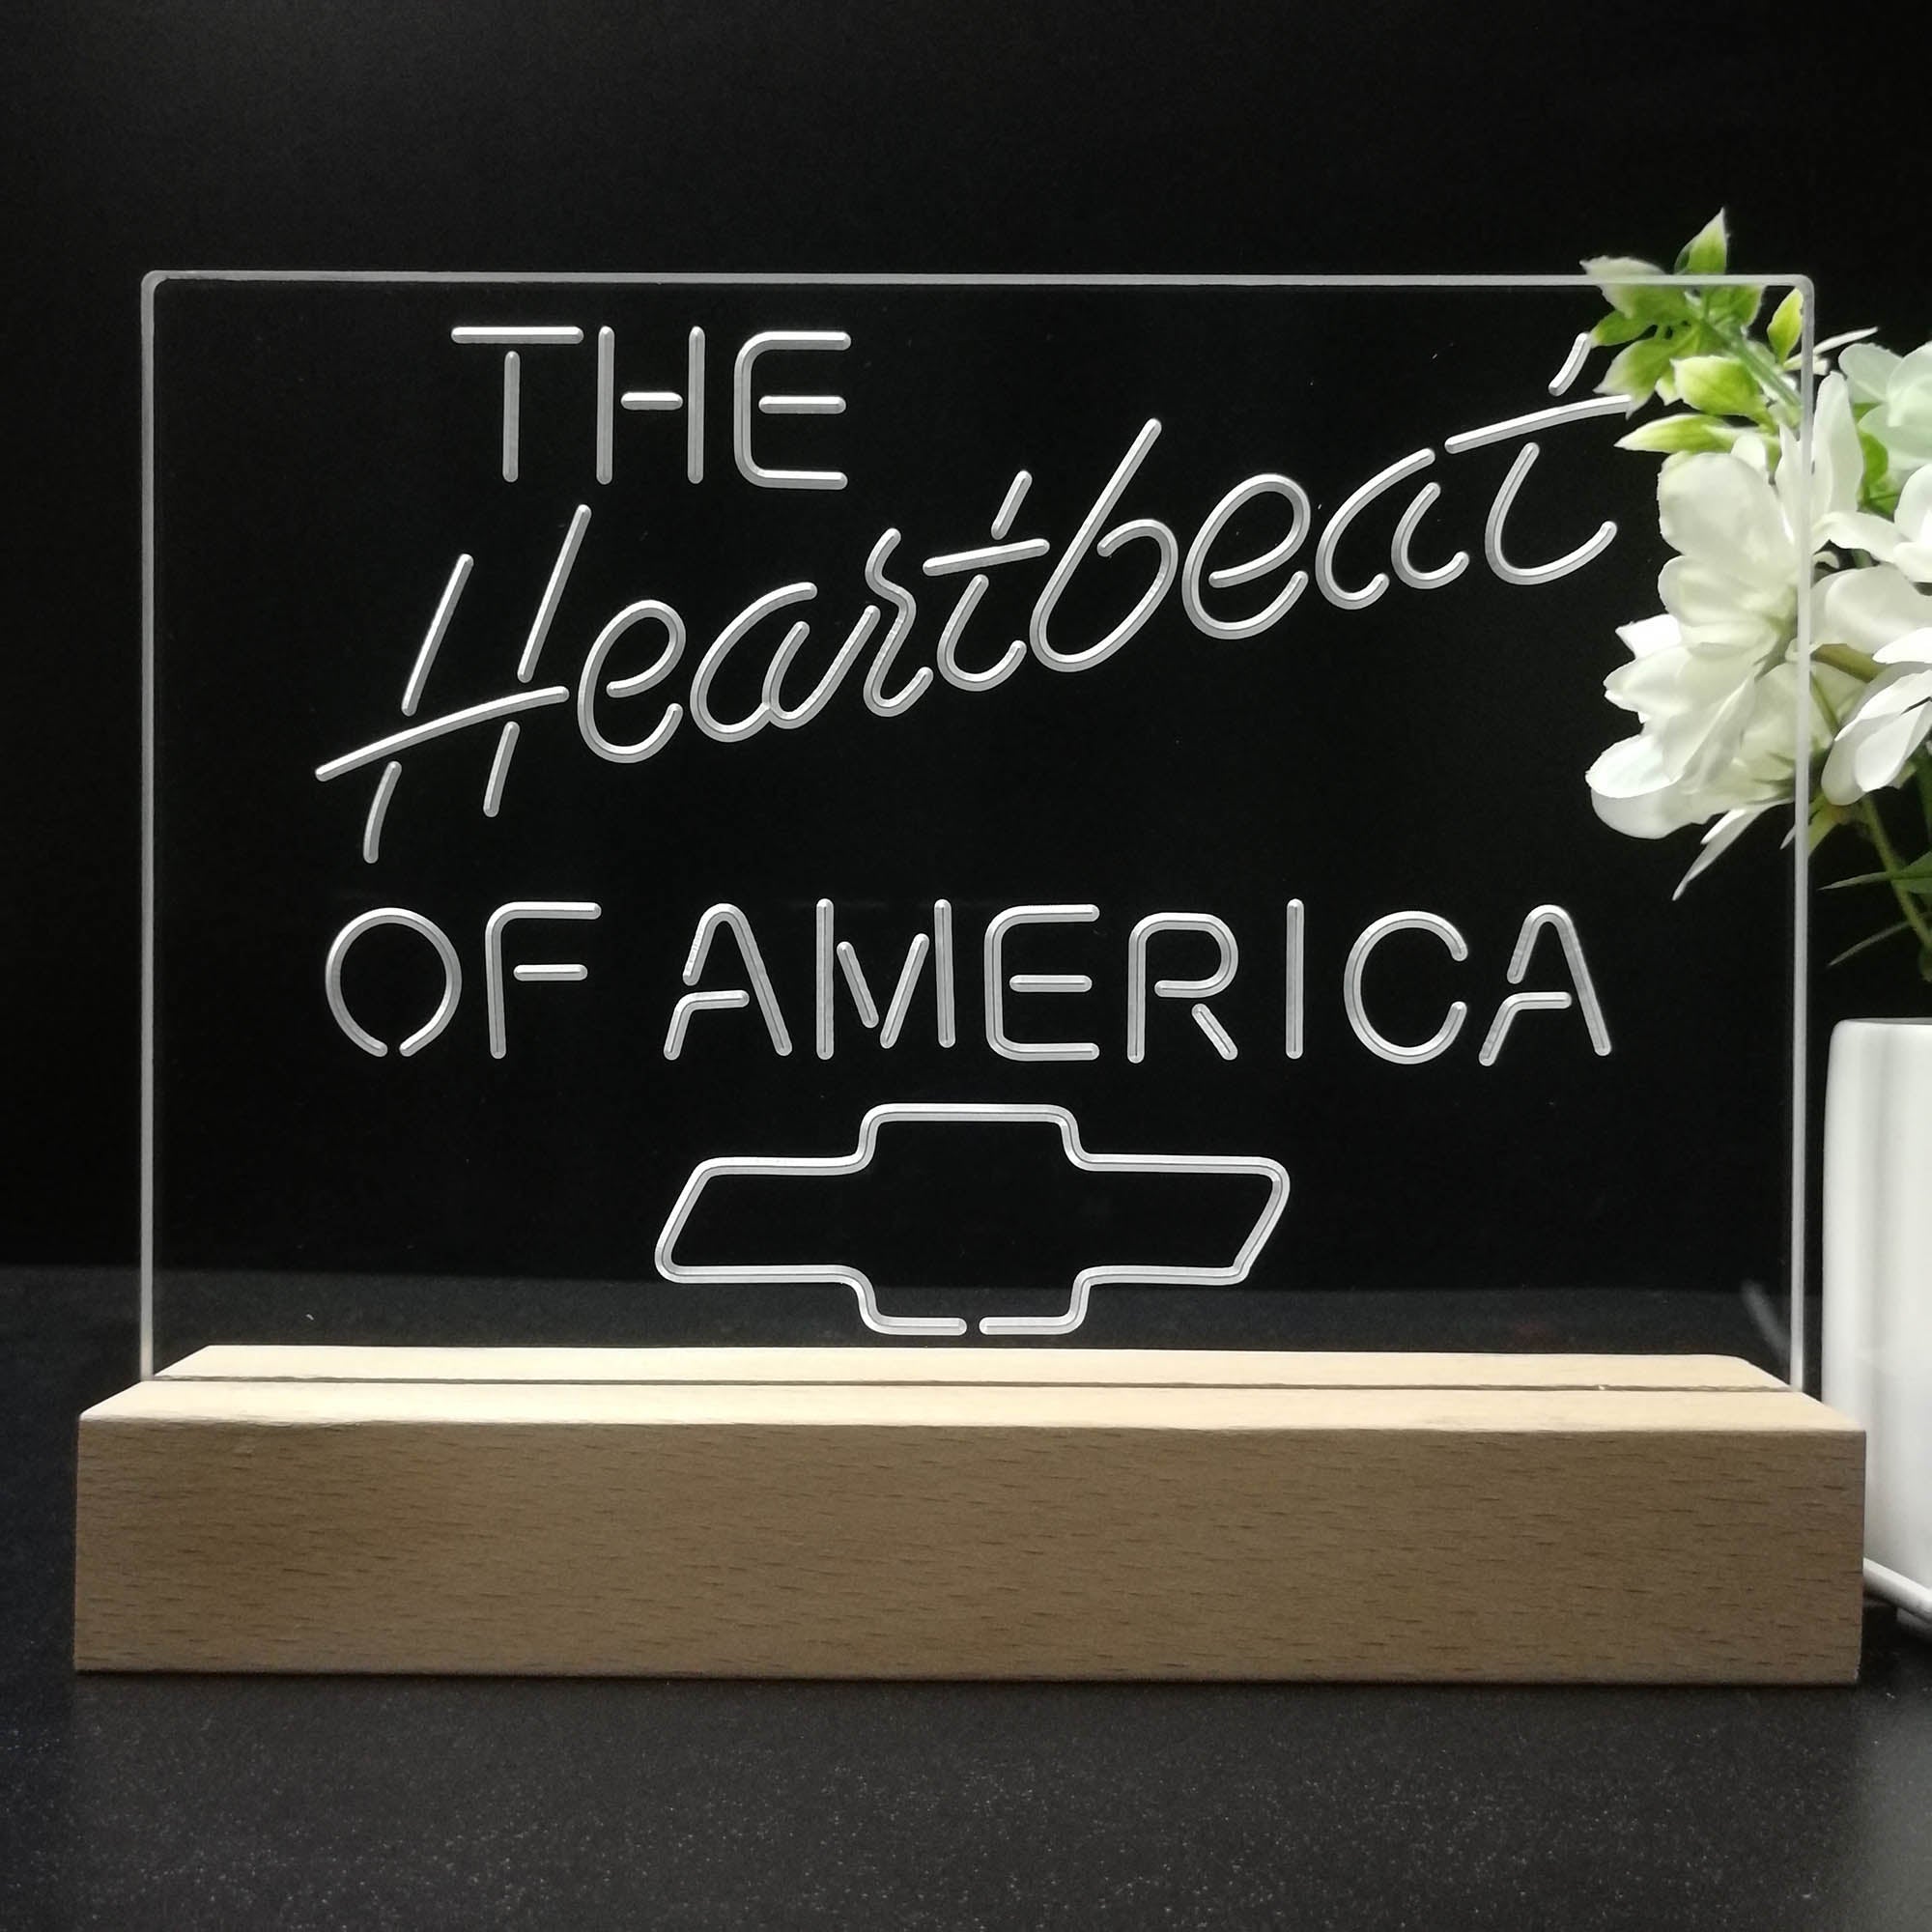 Chevrolet Heartbeat of America 3D LED Illusion Night Light